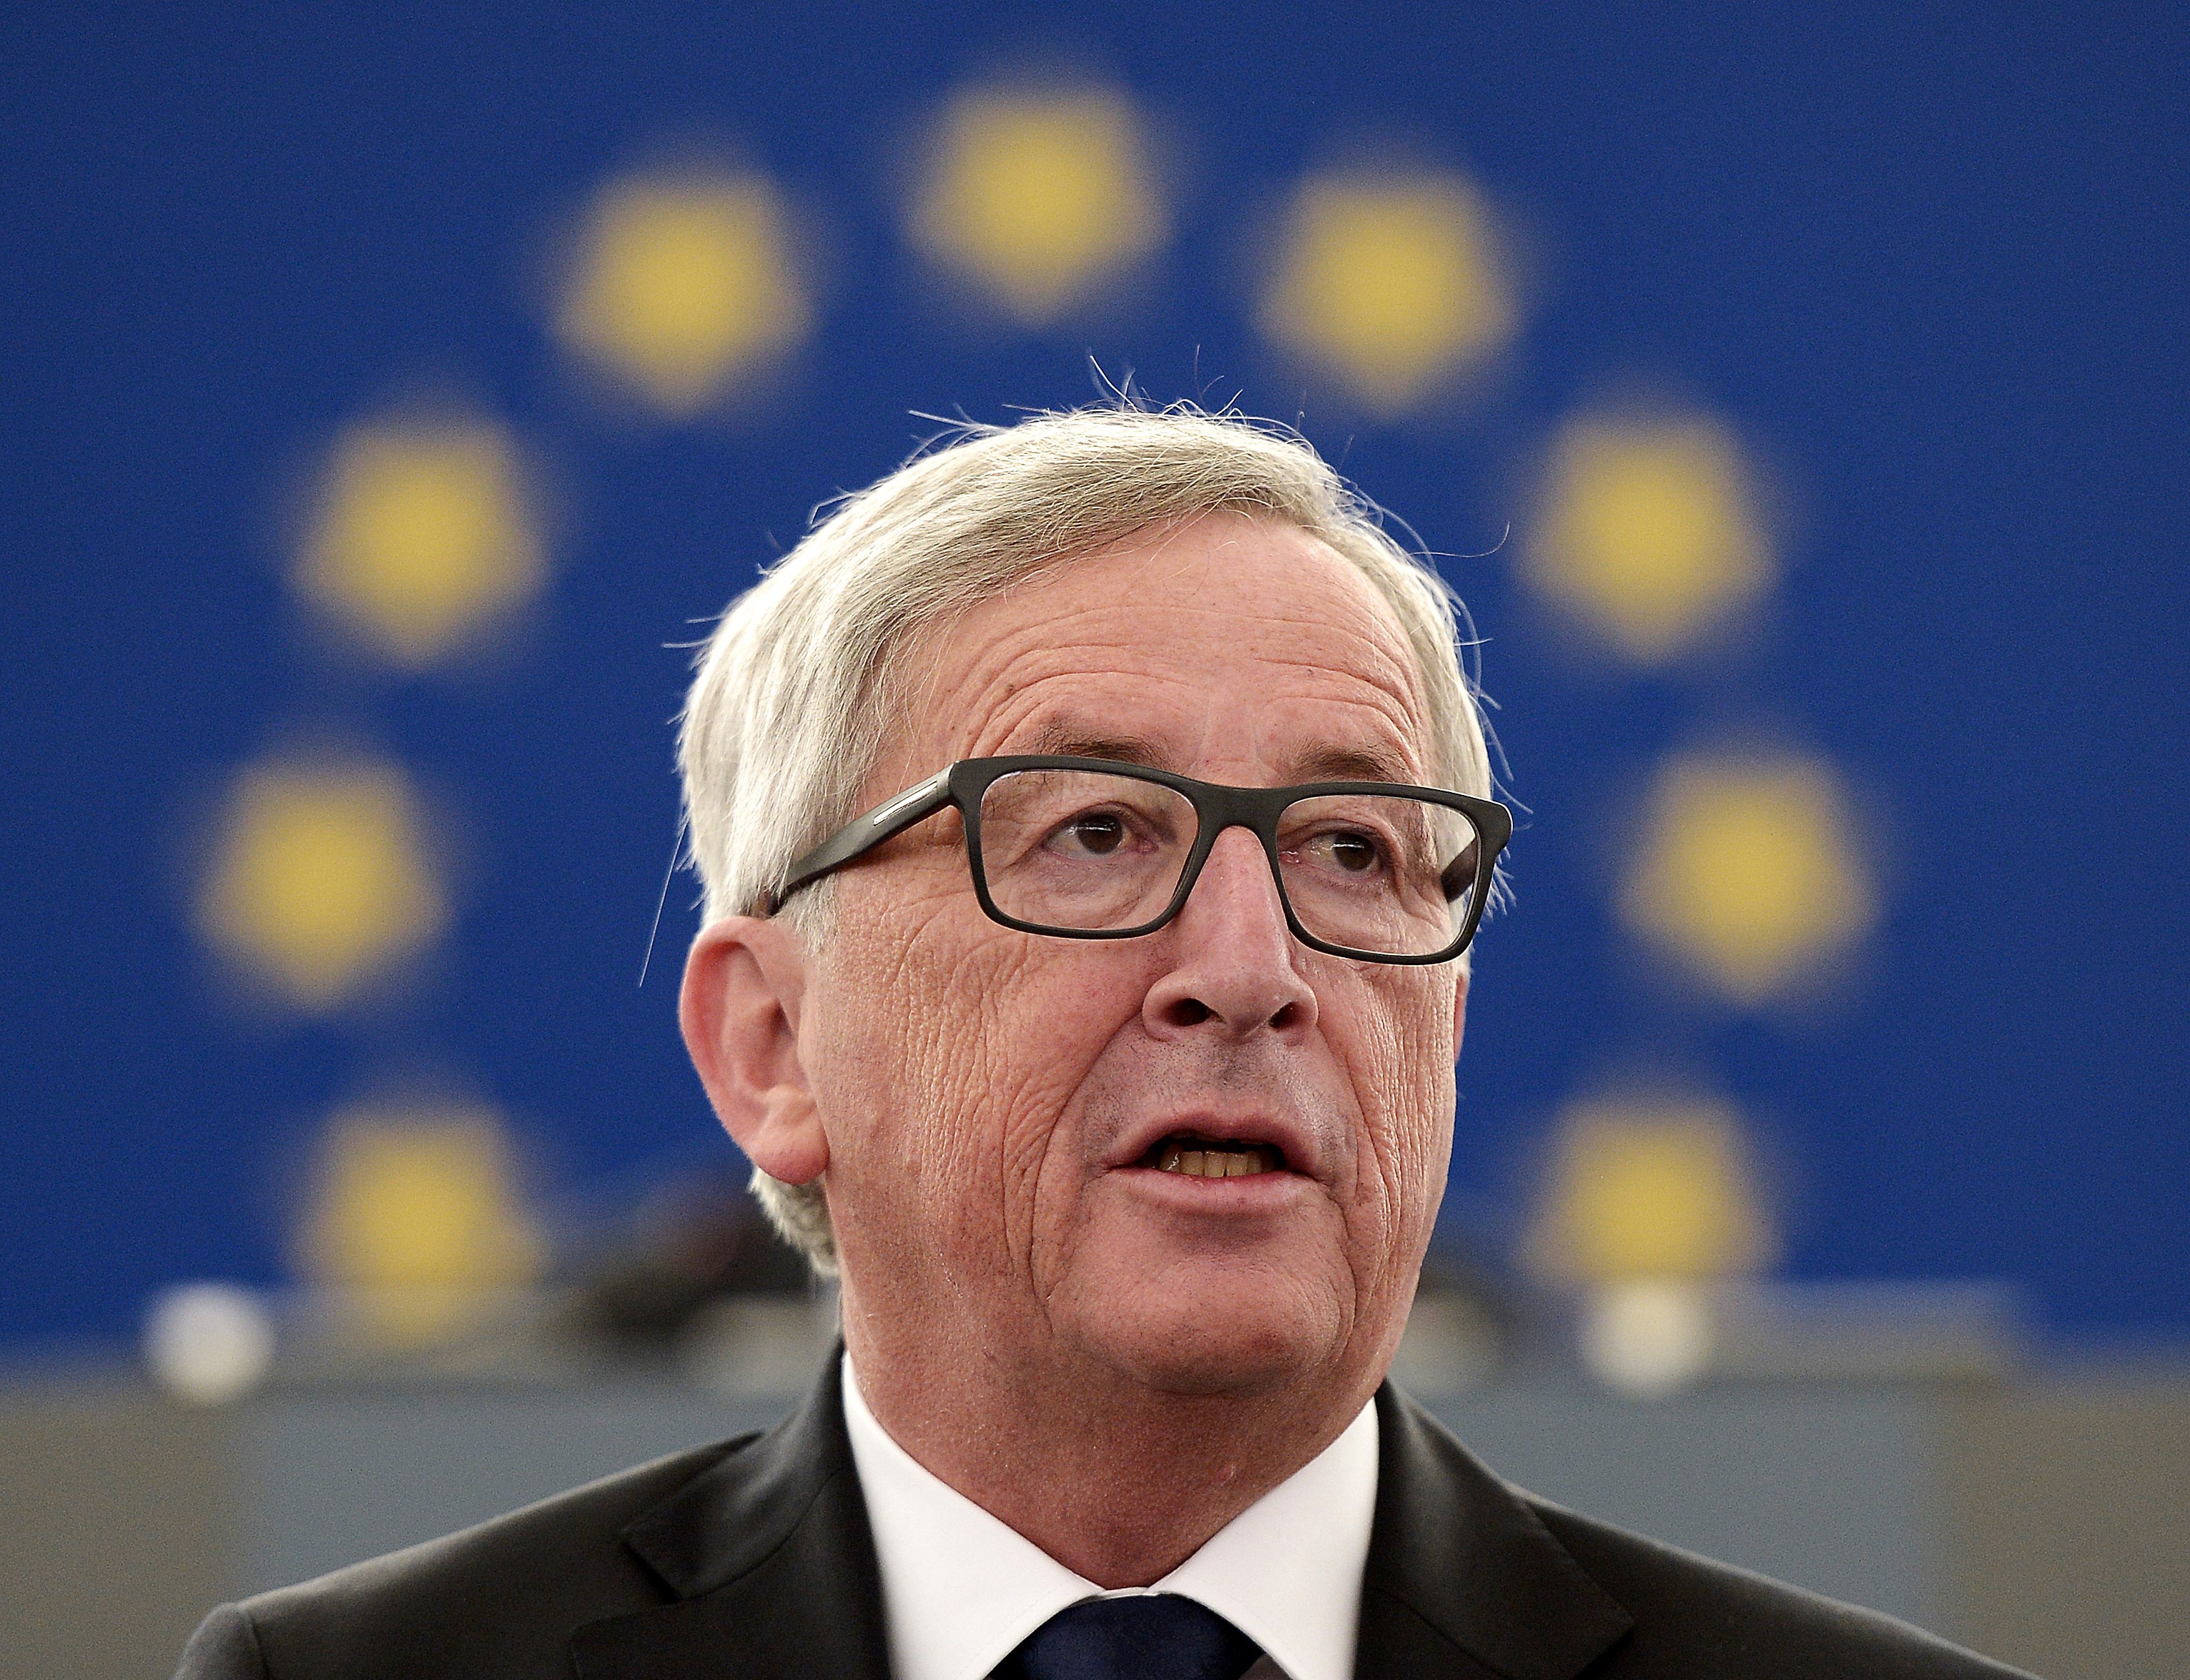 Jean-Claude Juncker, European Commission president, has a refugee plan